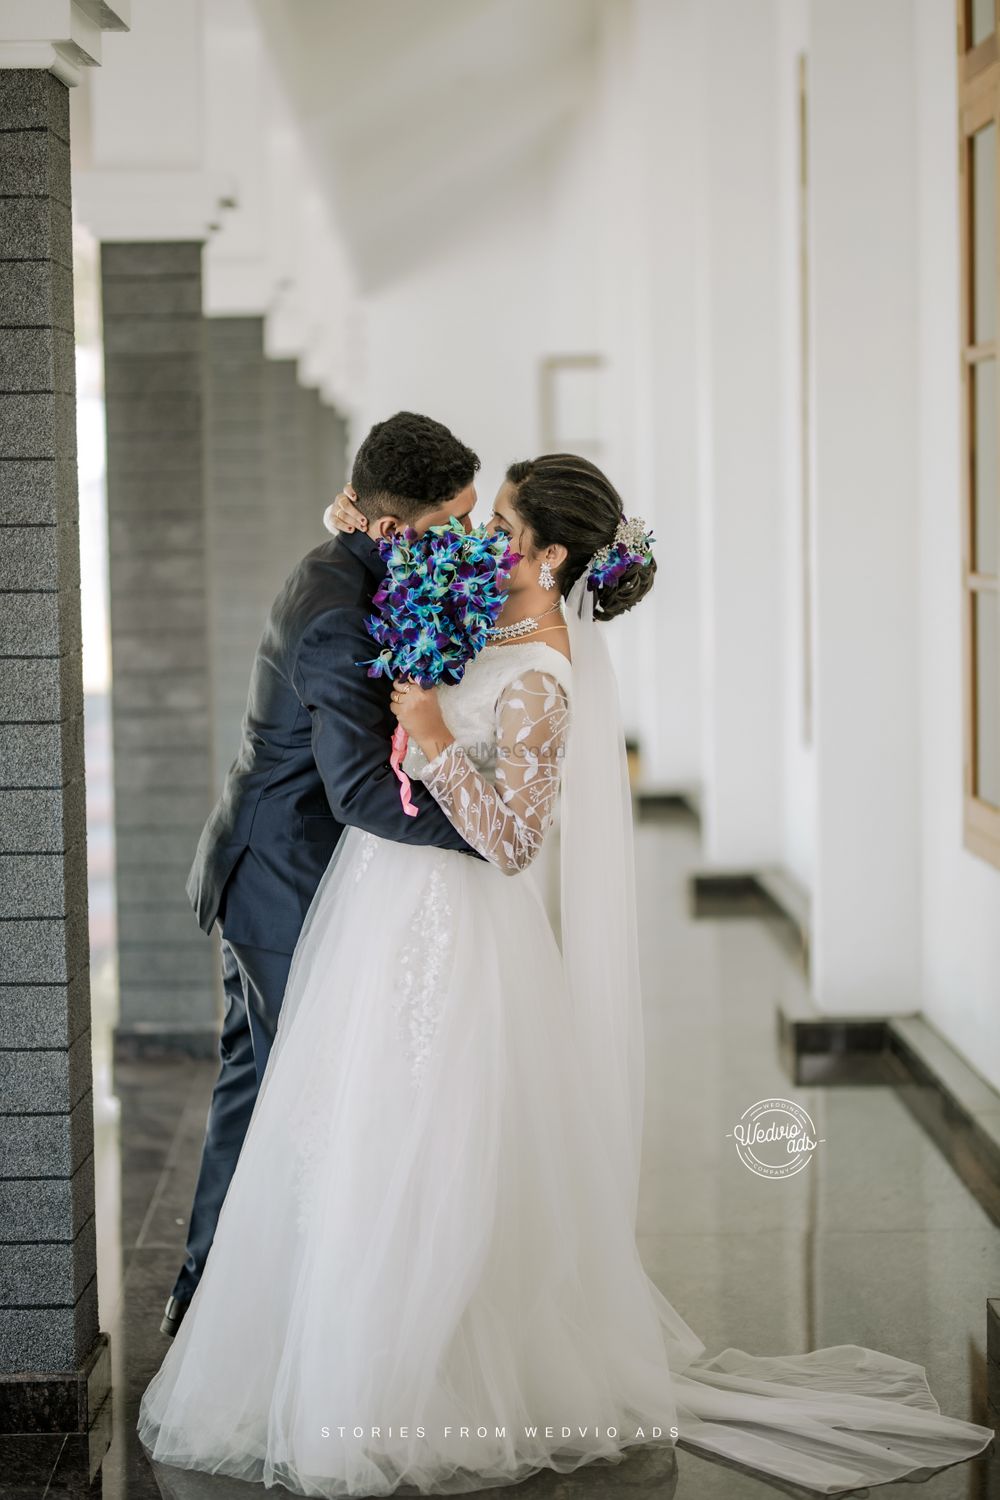 Photo By Wedvio Ads Wedding Company - Photographers